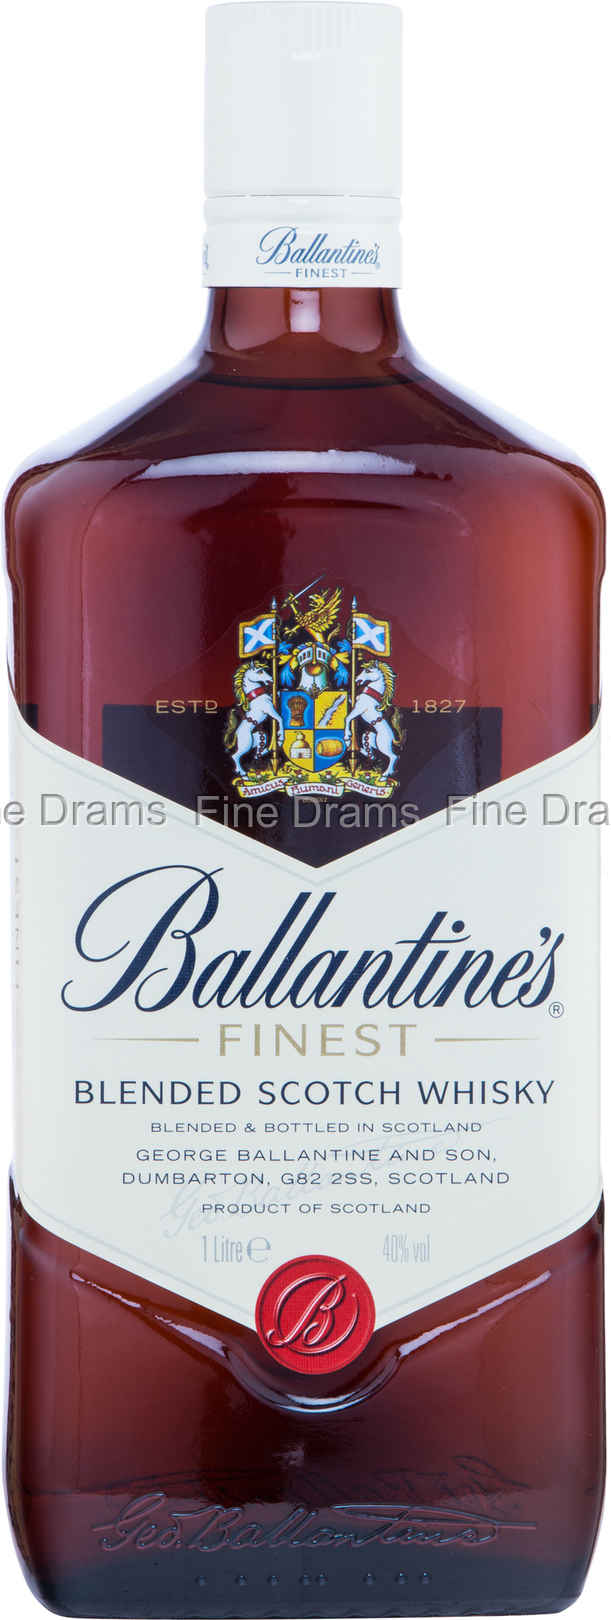 elektrode Beroemdheid inch Ballantine's Blended Scotch Whisky (1 Liter)